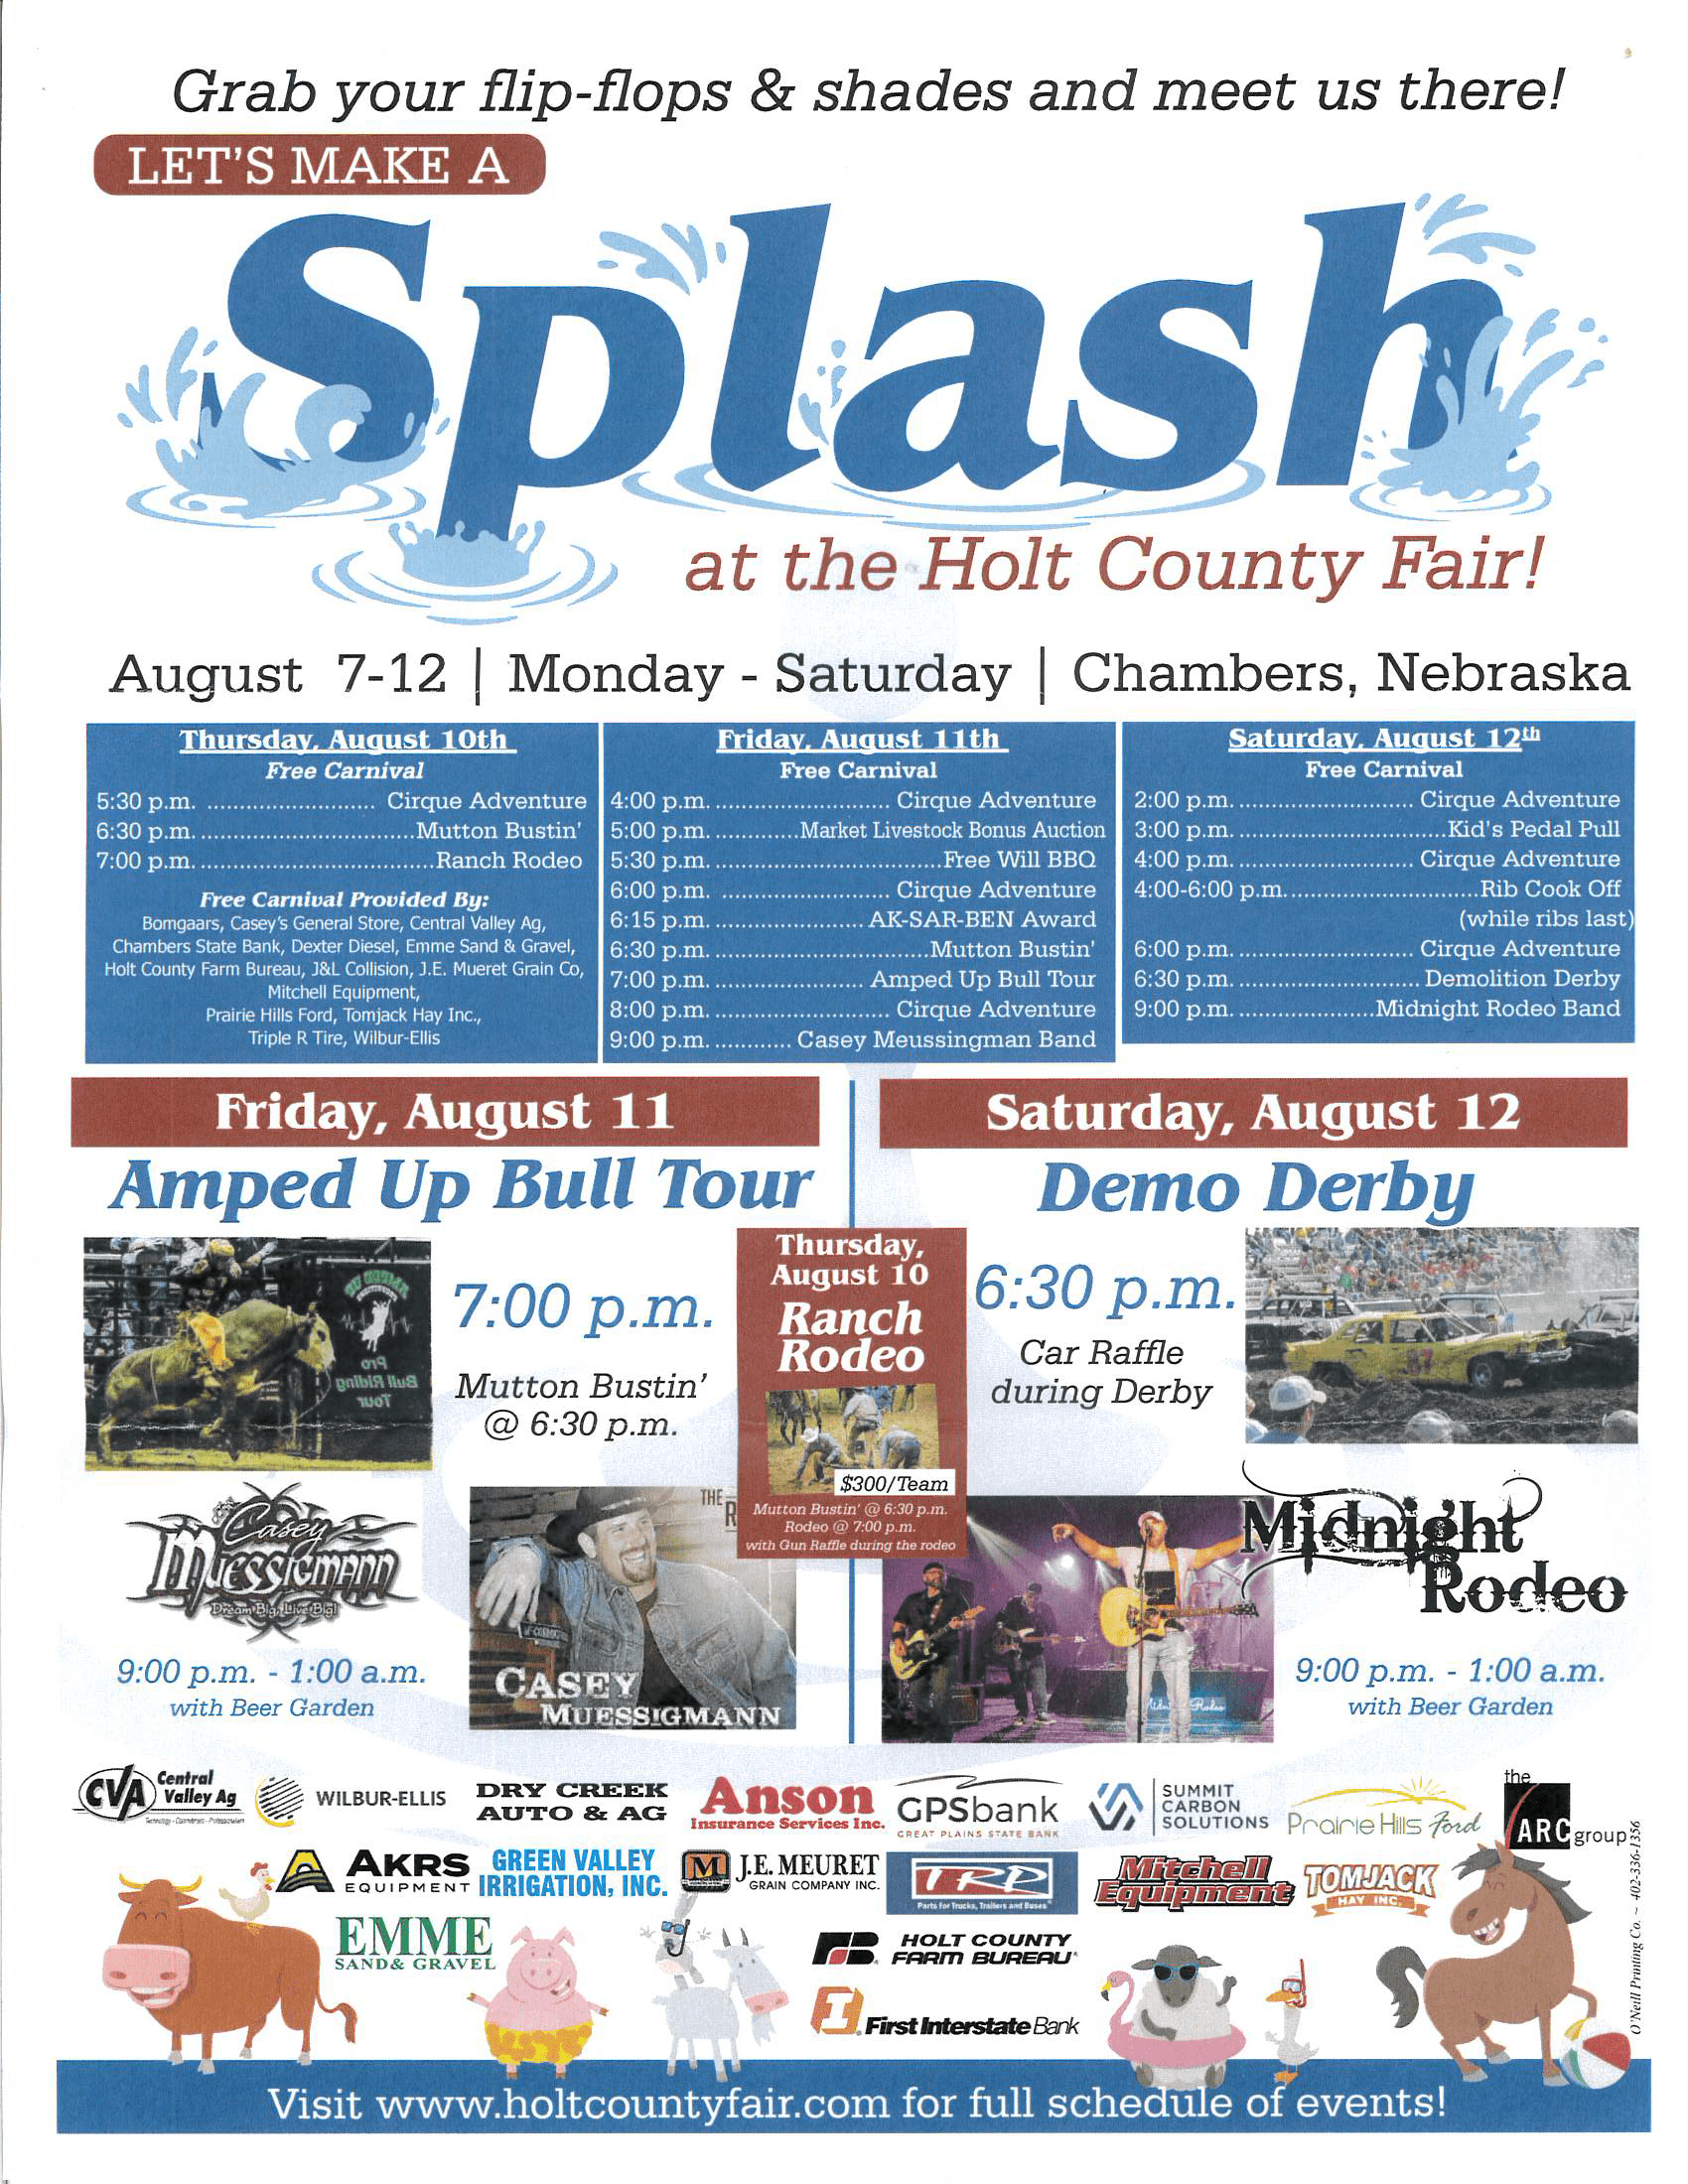 Let's Make a Splash at the Holt County Fair Holt County Economic